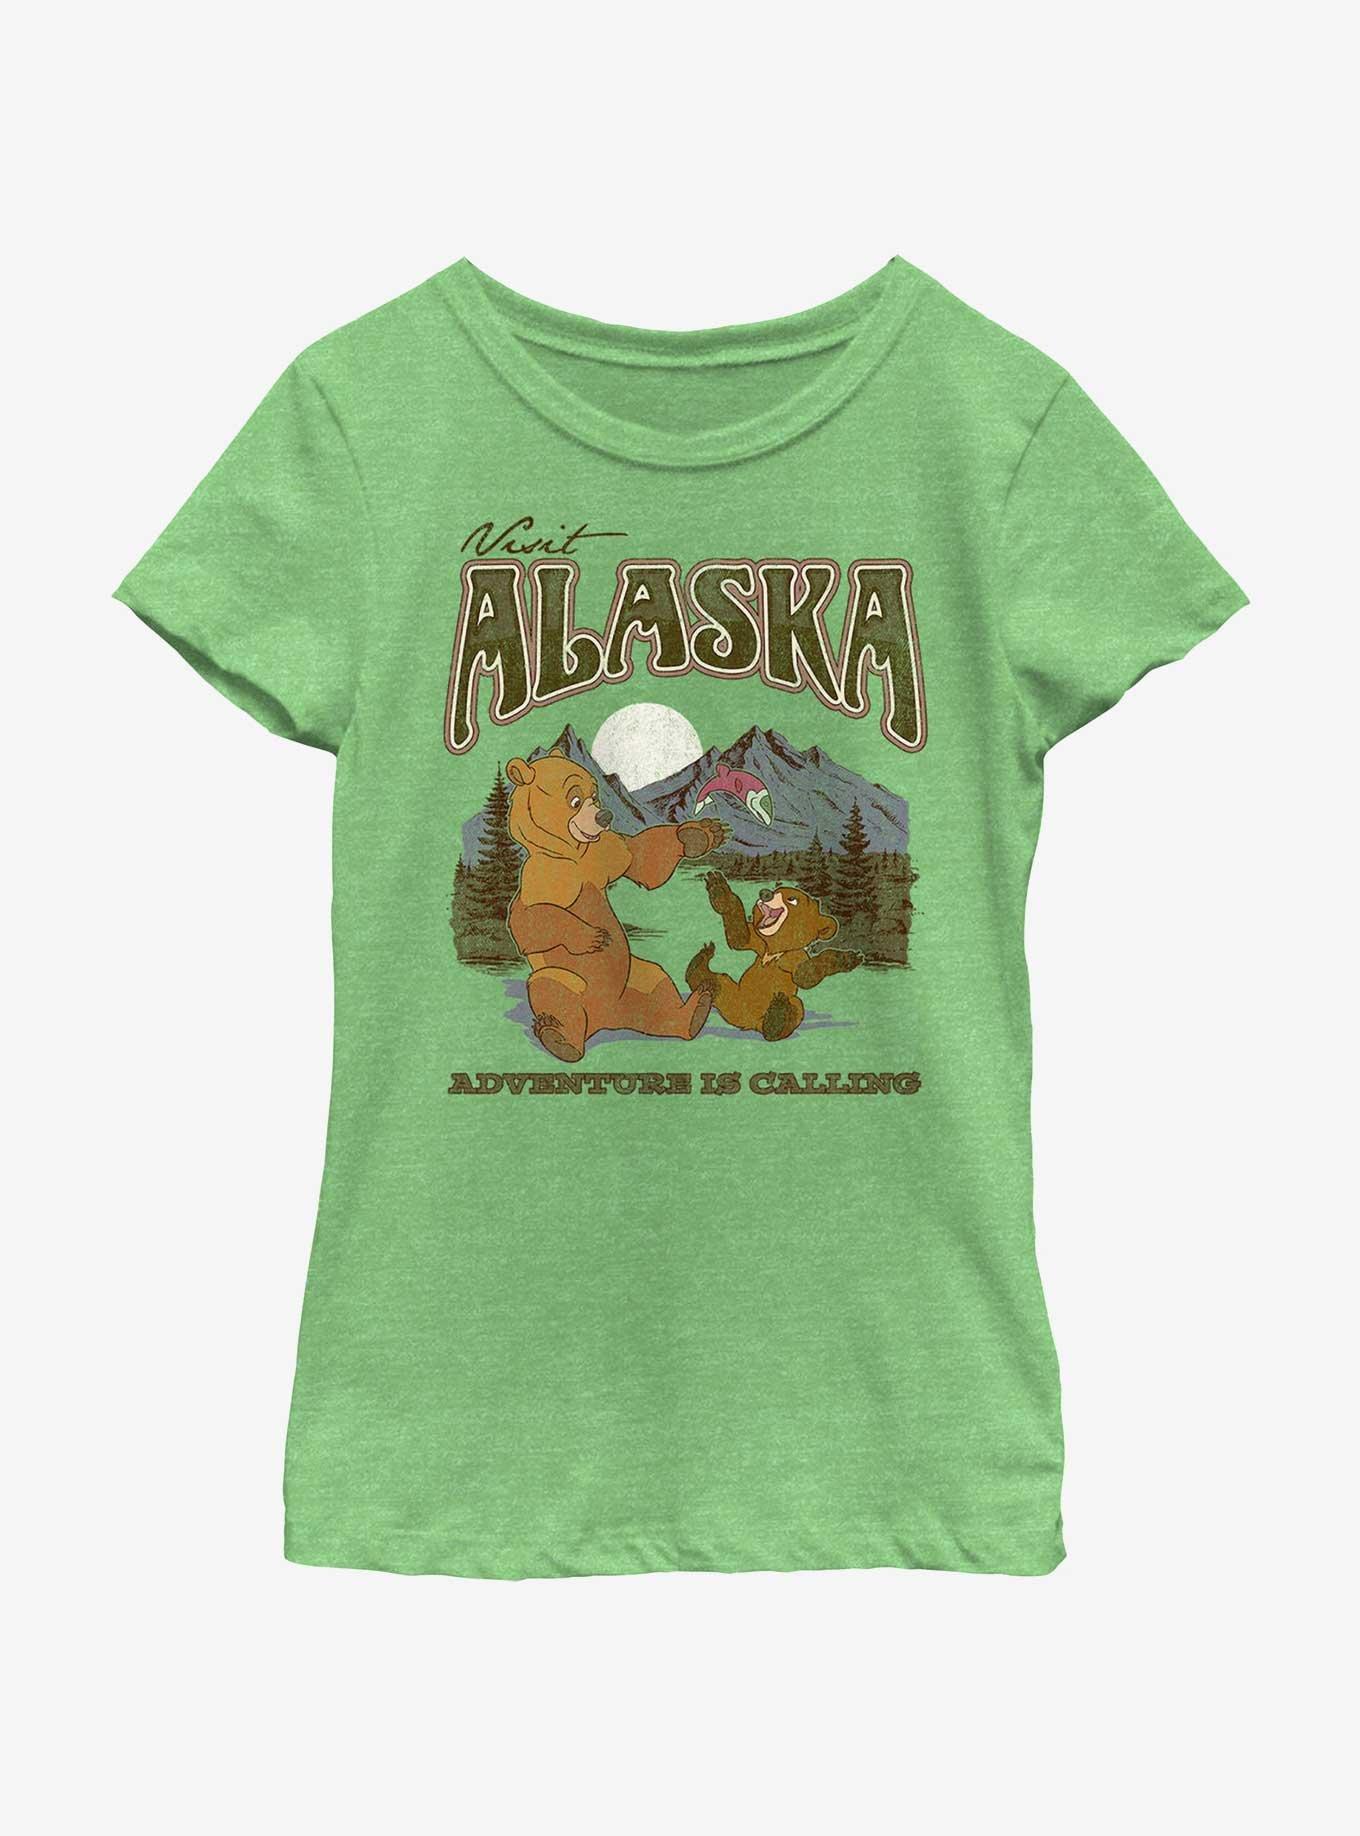 Disney Brother Bear Visit Alaska Adventure Is Calling Youth Girls T-Shirt, GRN APPLE, hi-res